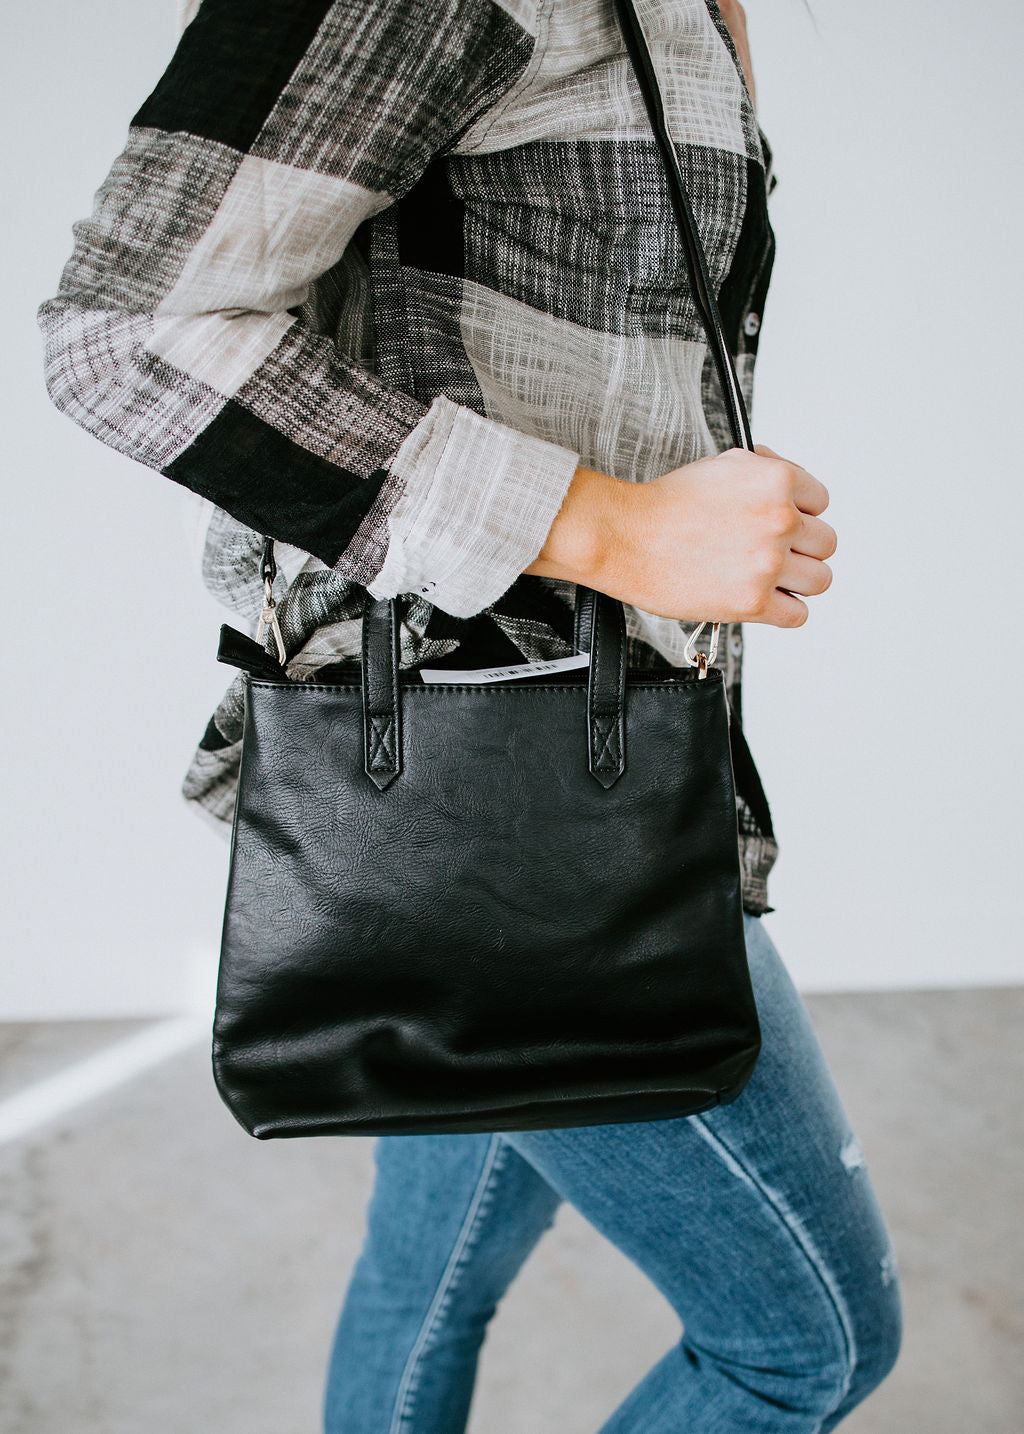 Moda Luxe Laurel Crossbody Bag - Free Shipping